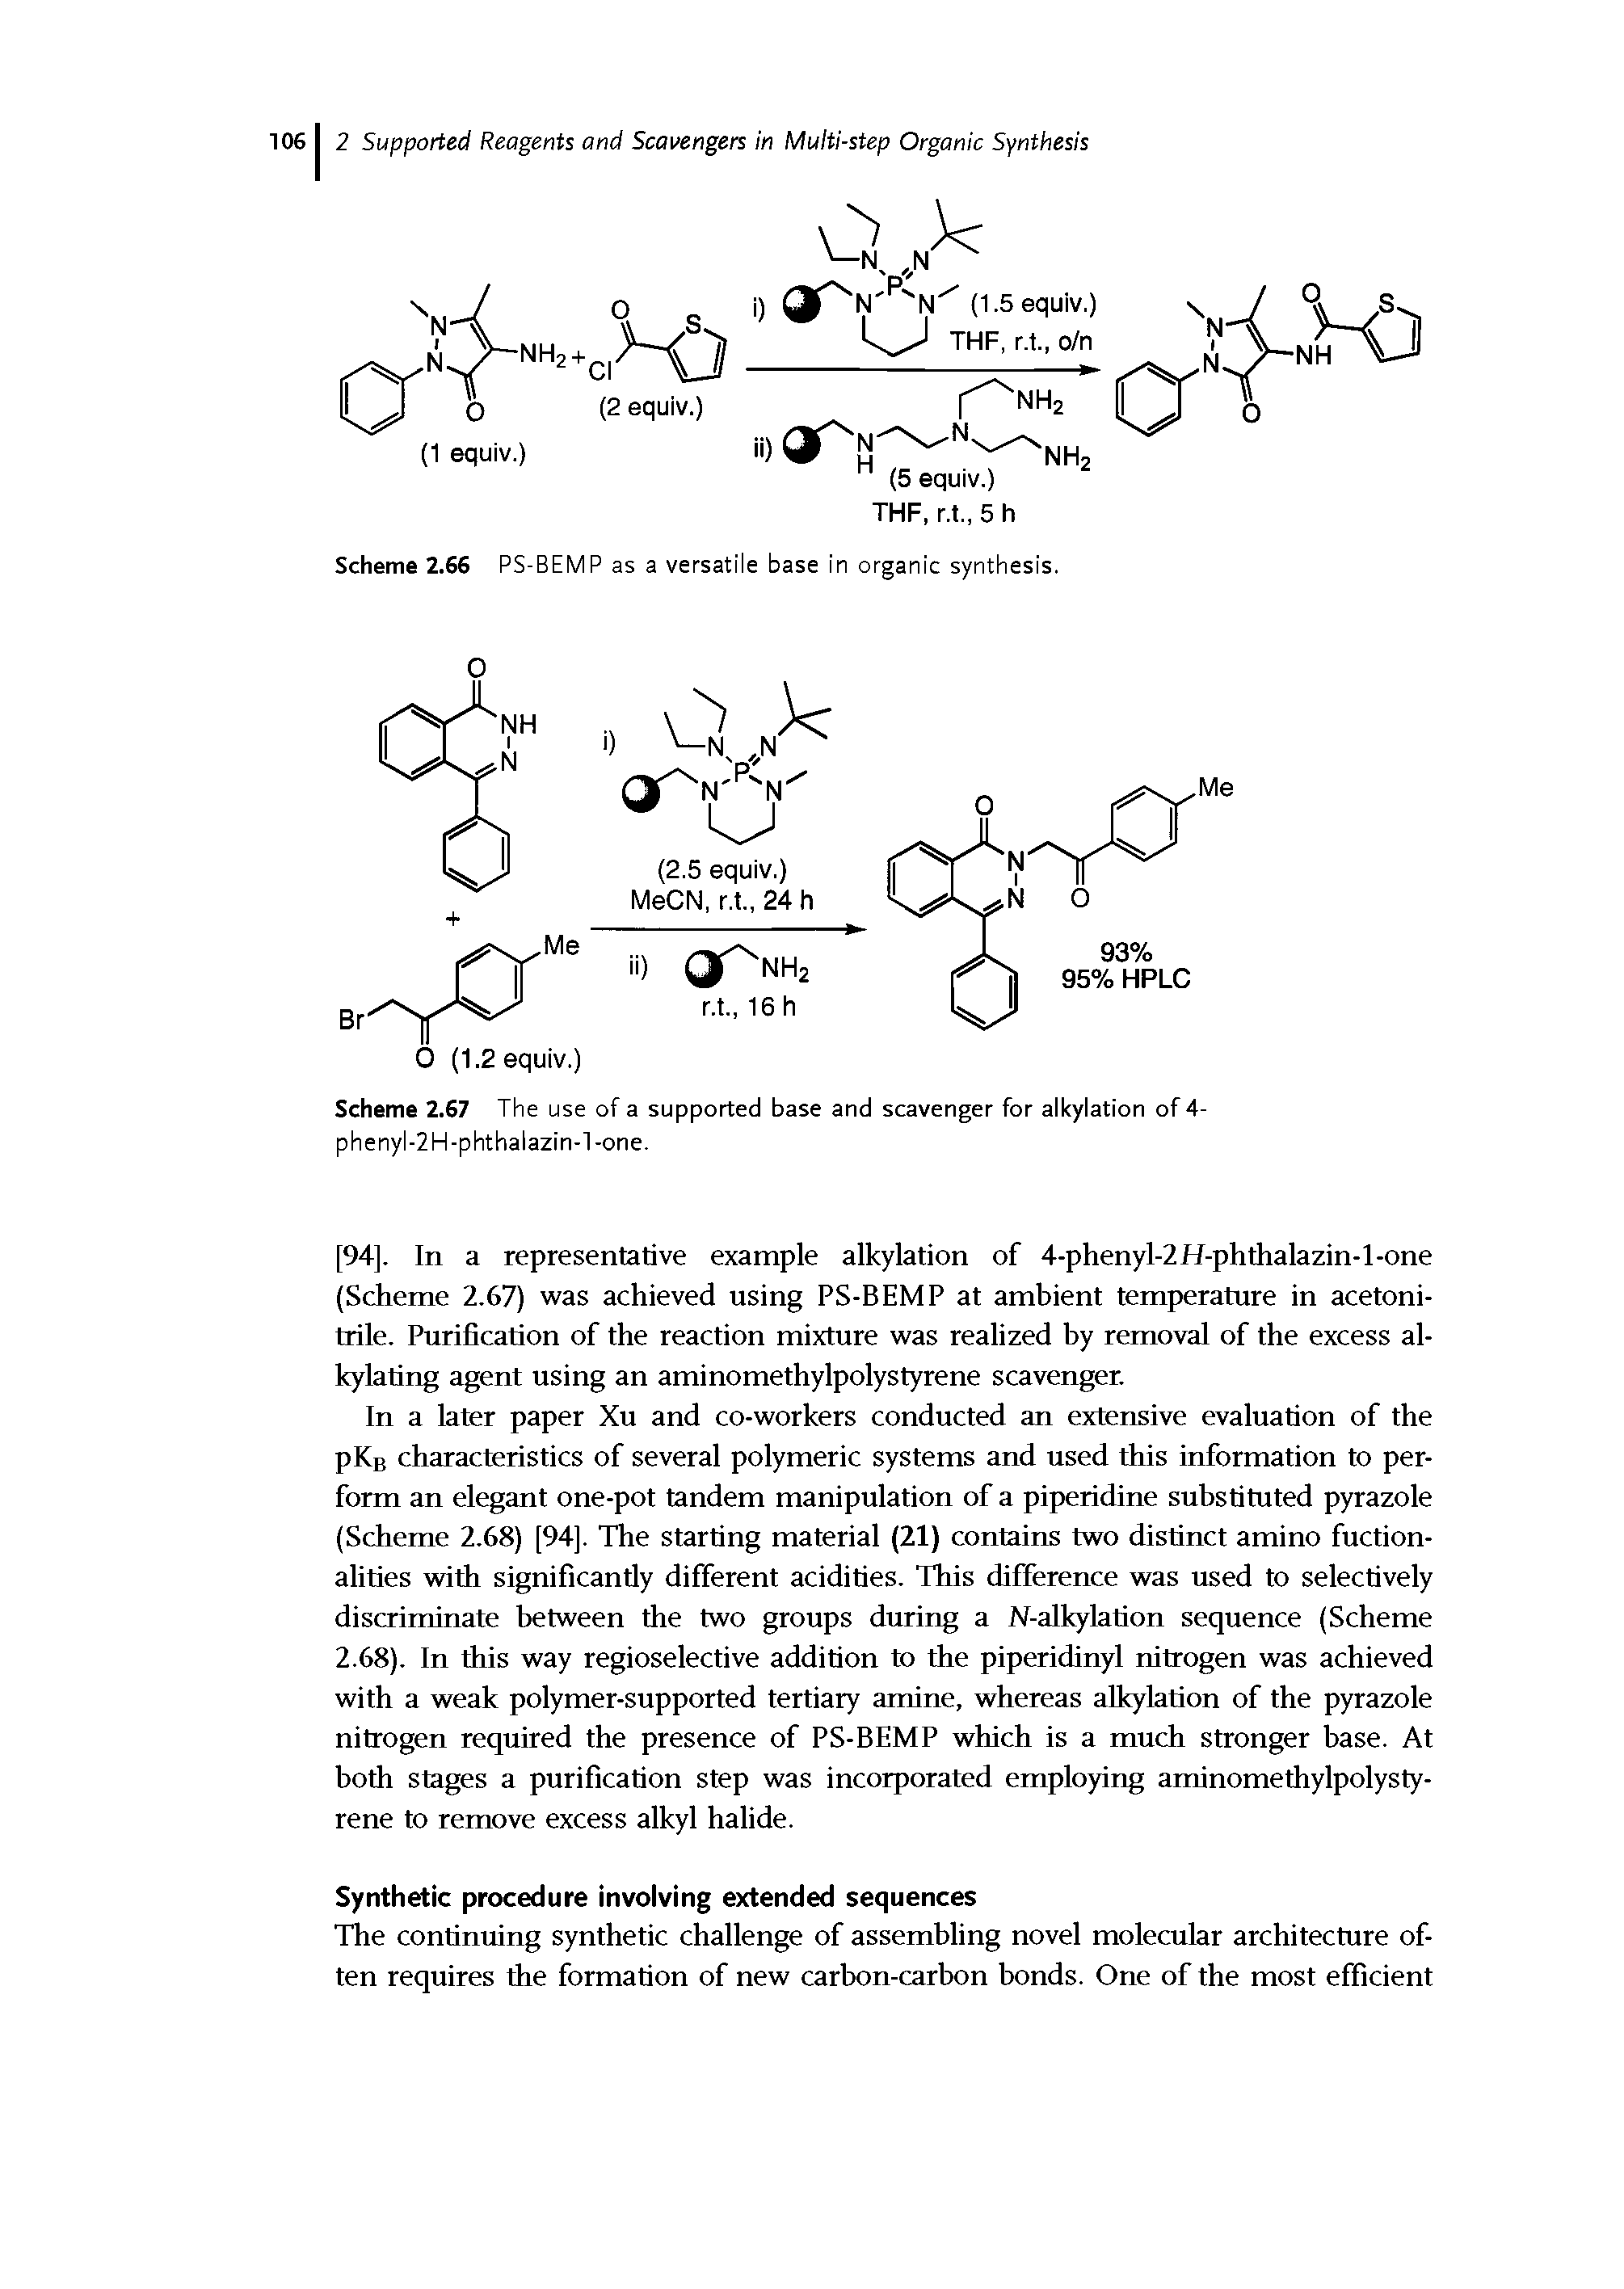 Scheme 2.66 PS-BEMP as a versatile base in organic synthesis.